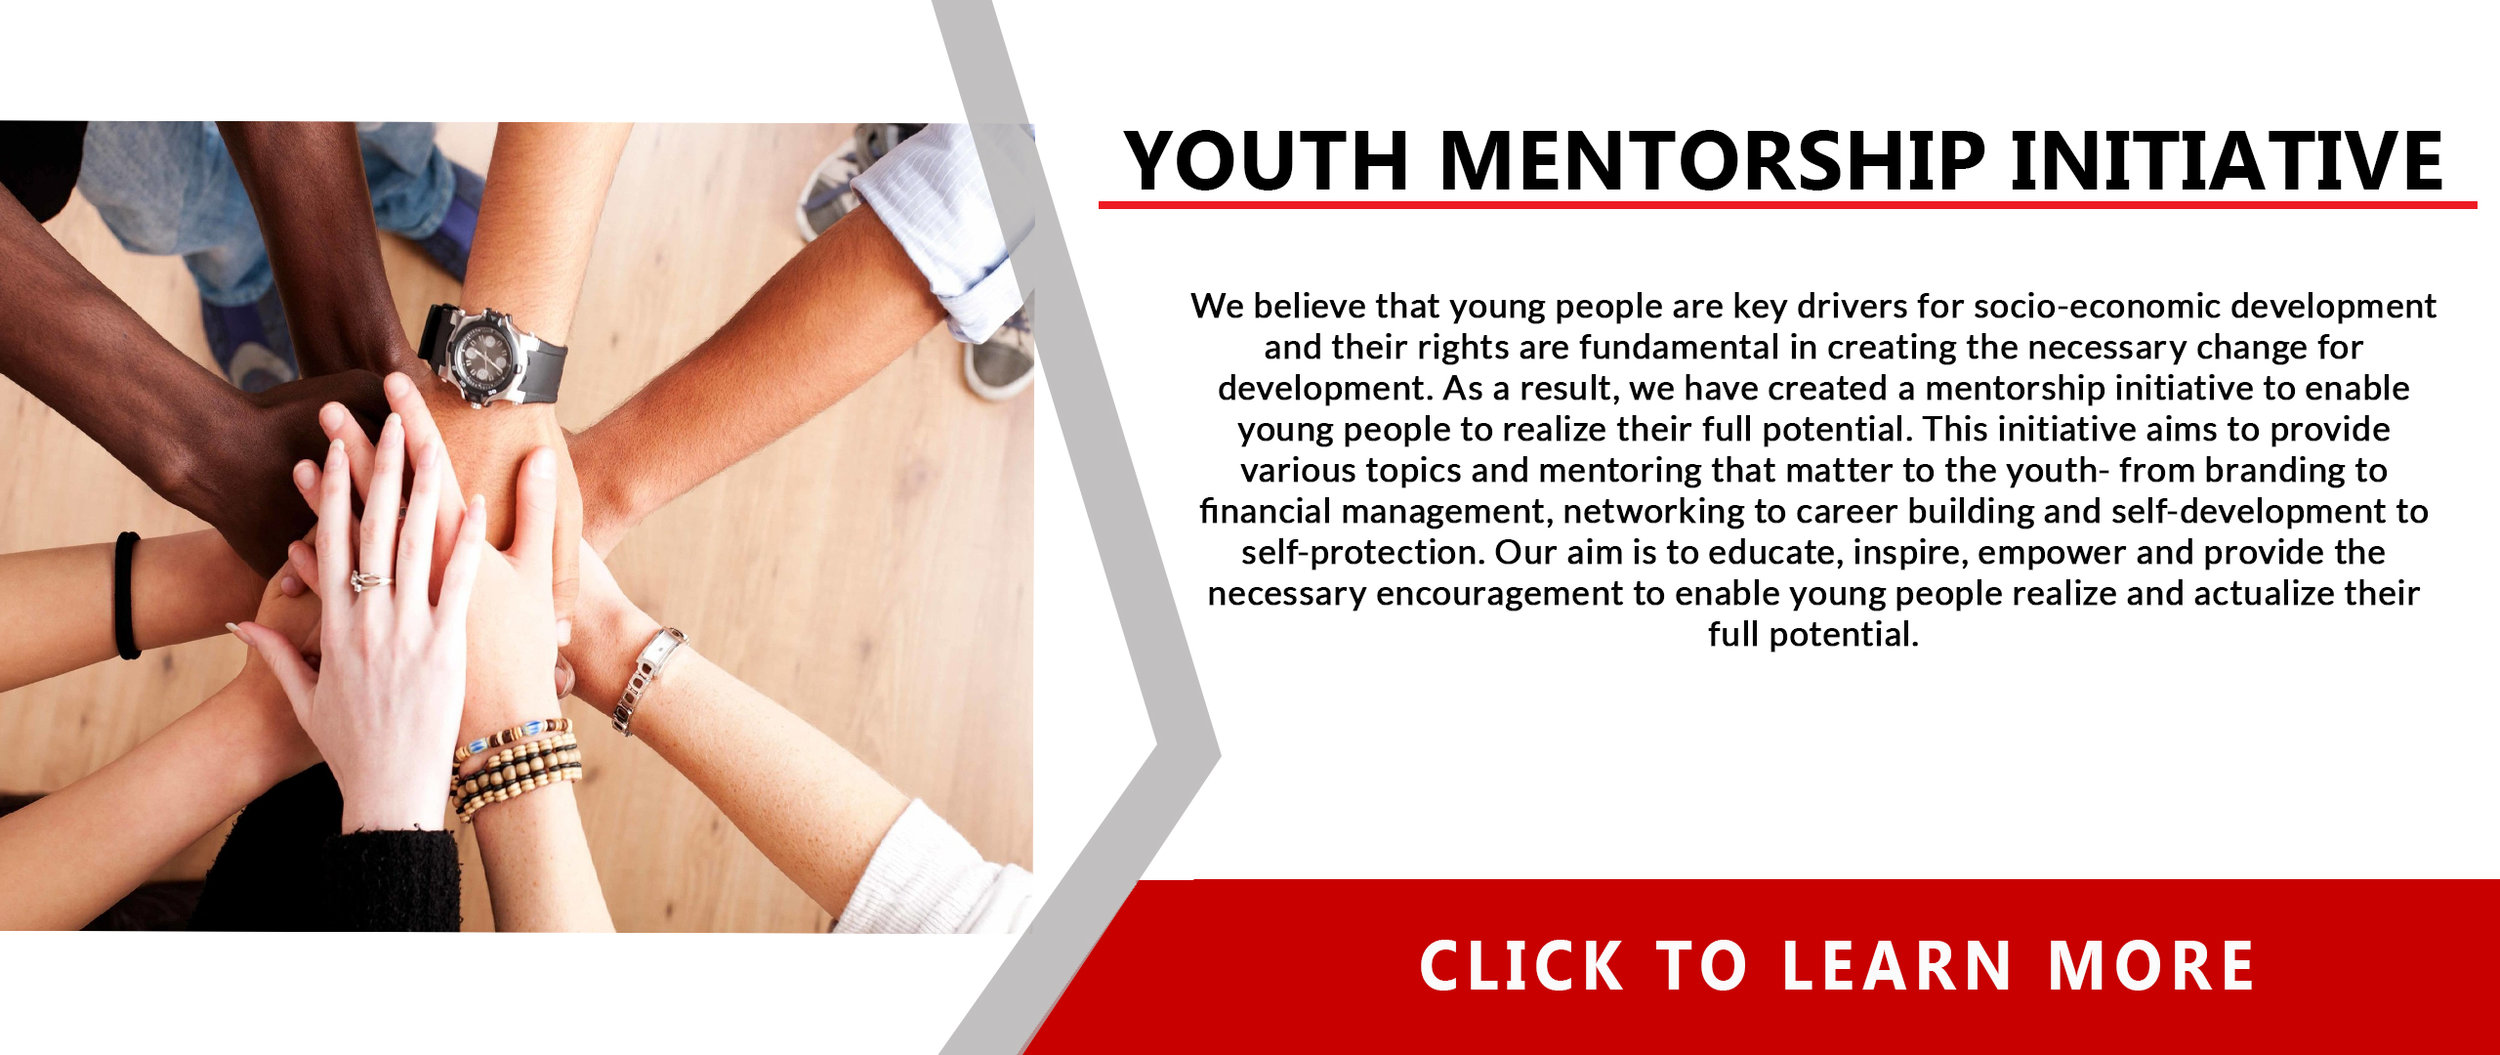 youth mentorship initiative.jpg